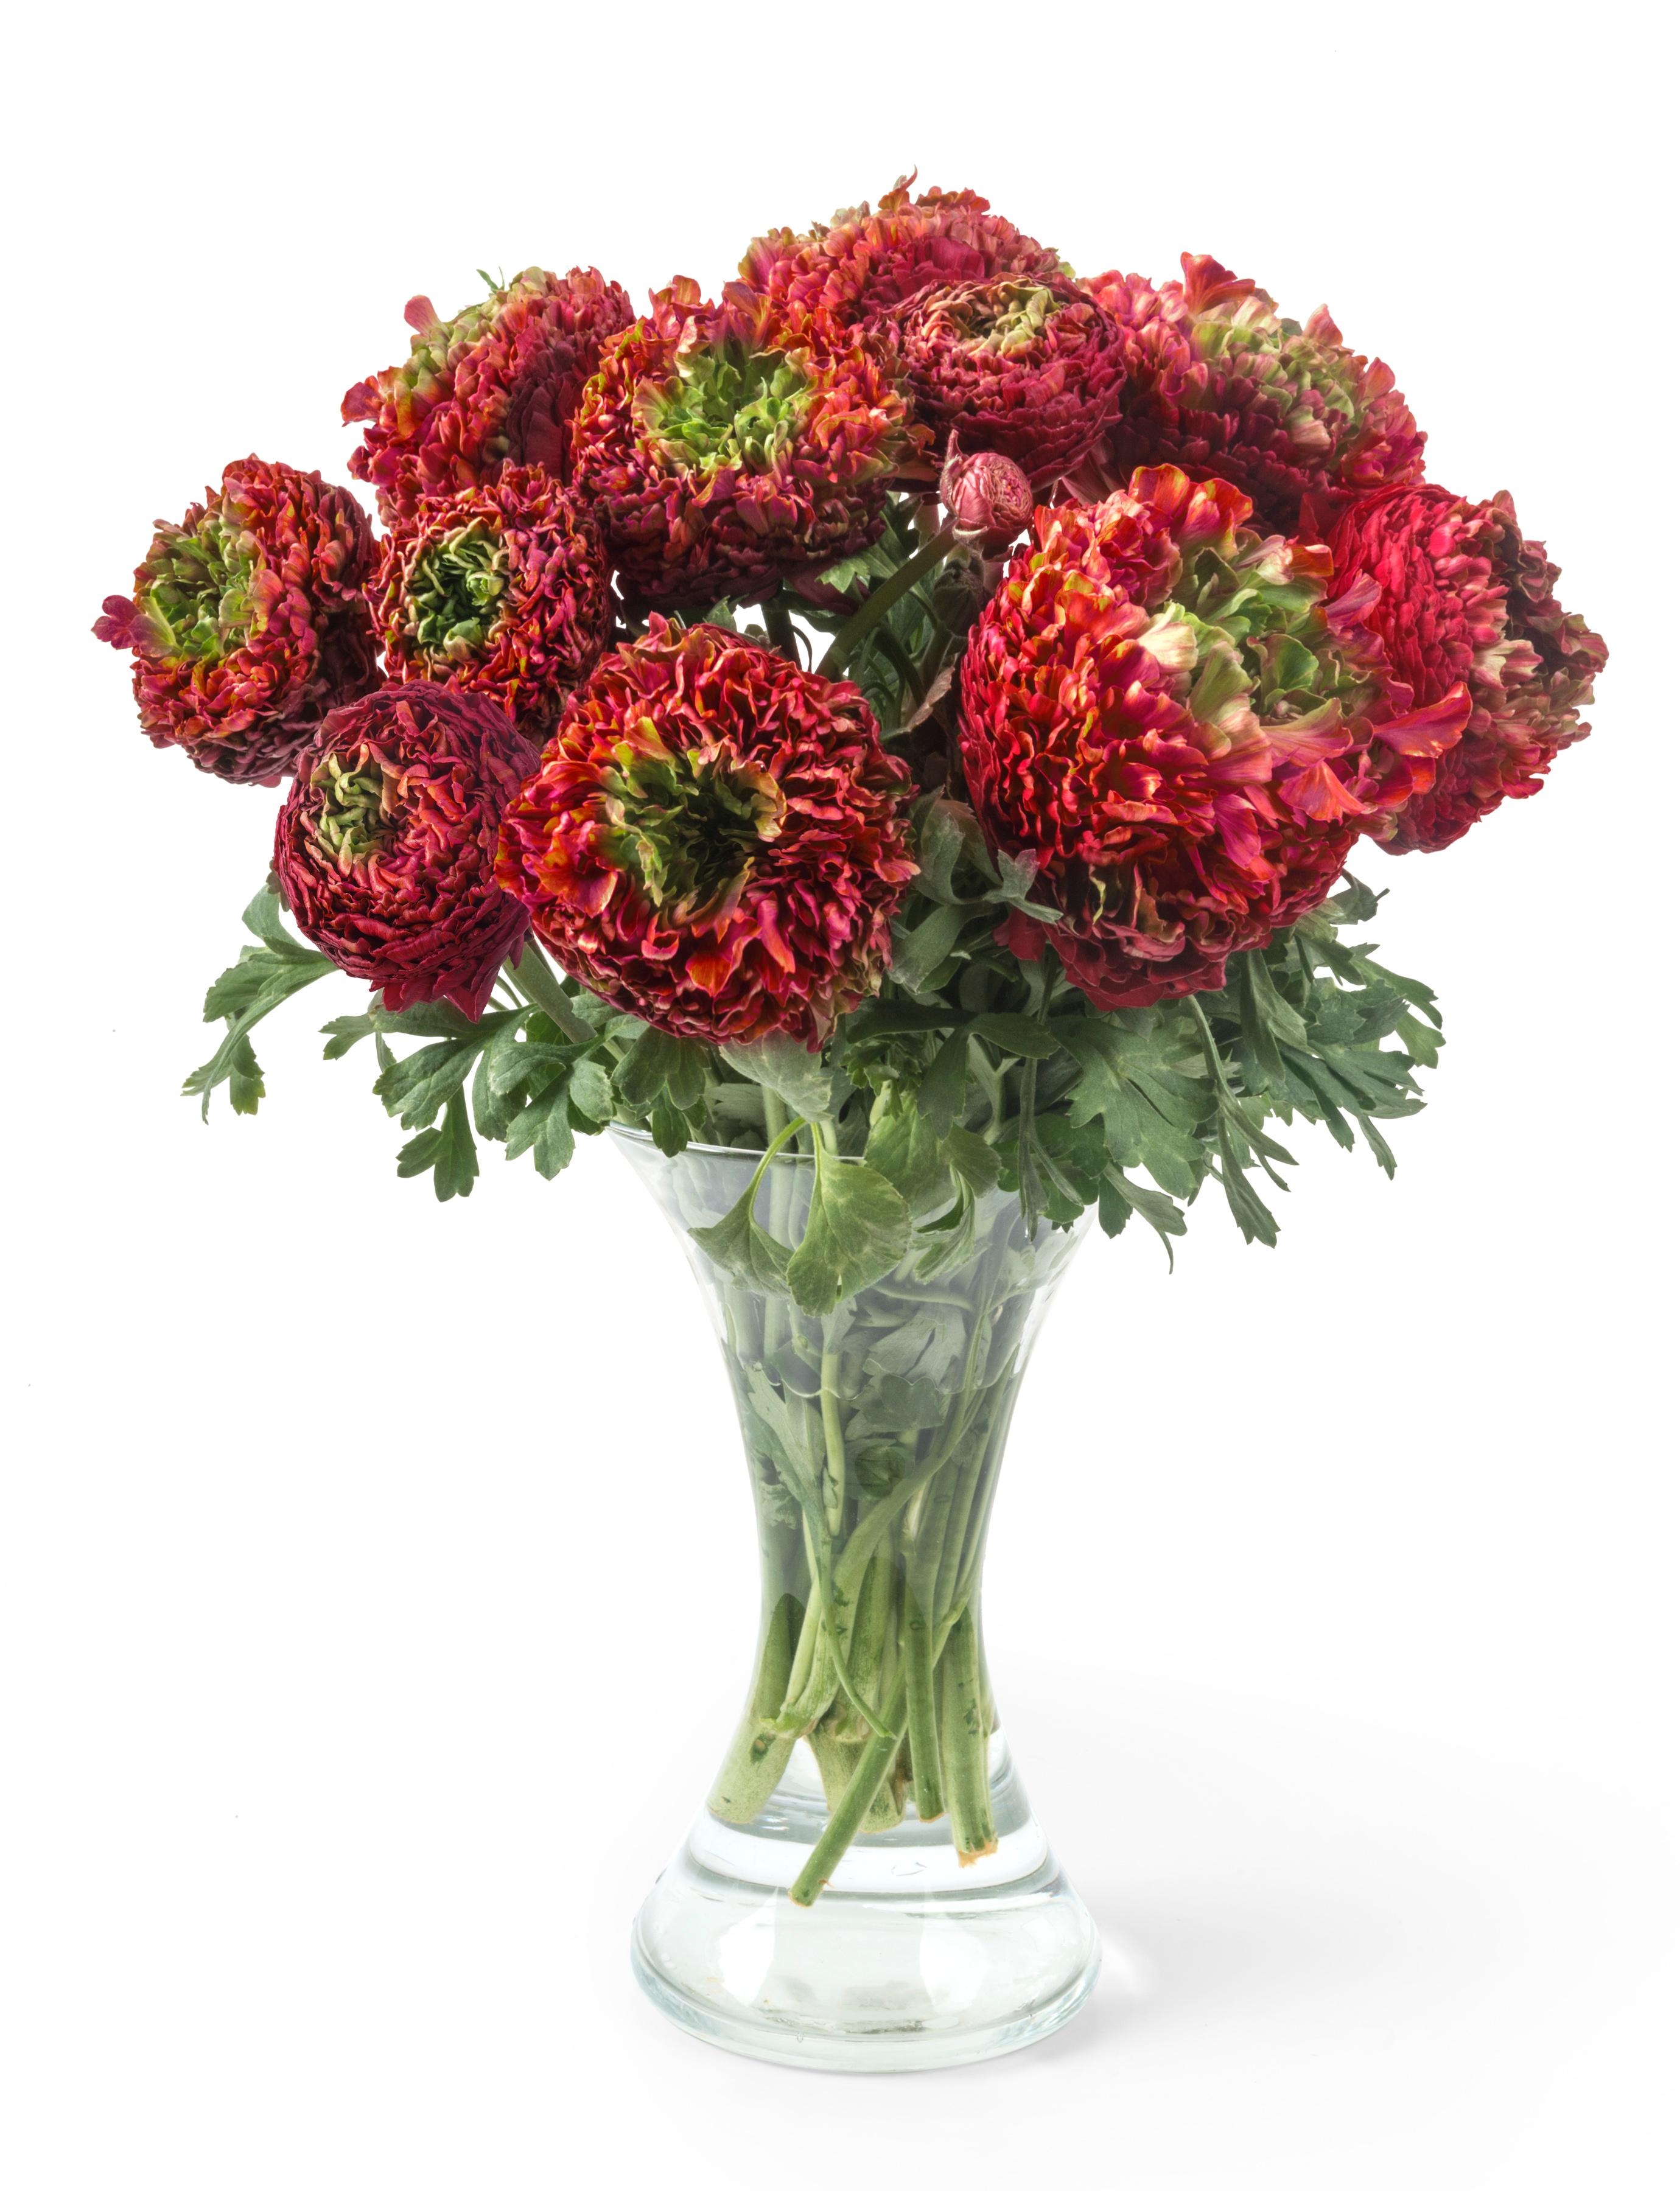 Ranunculus Romance Odon from Leo Berbee Bulb Company